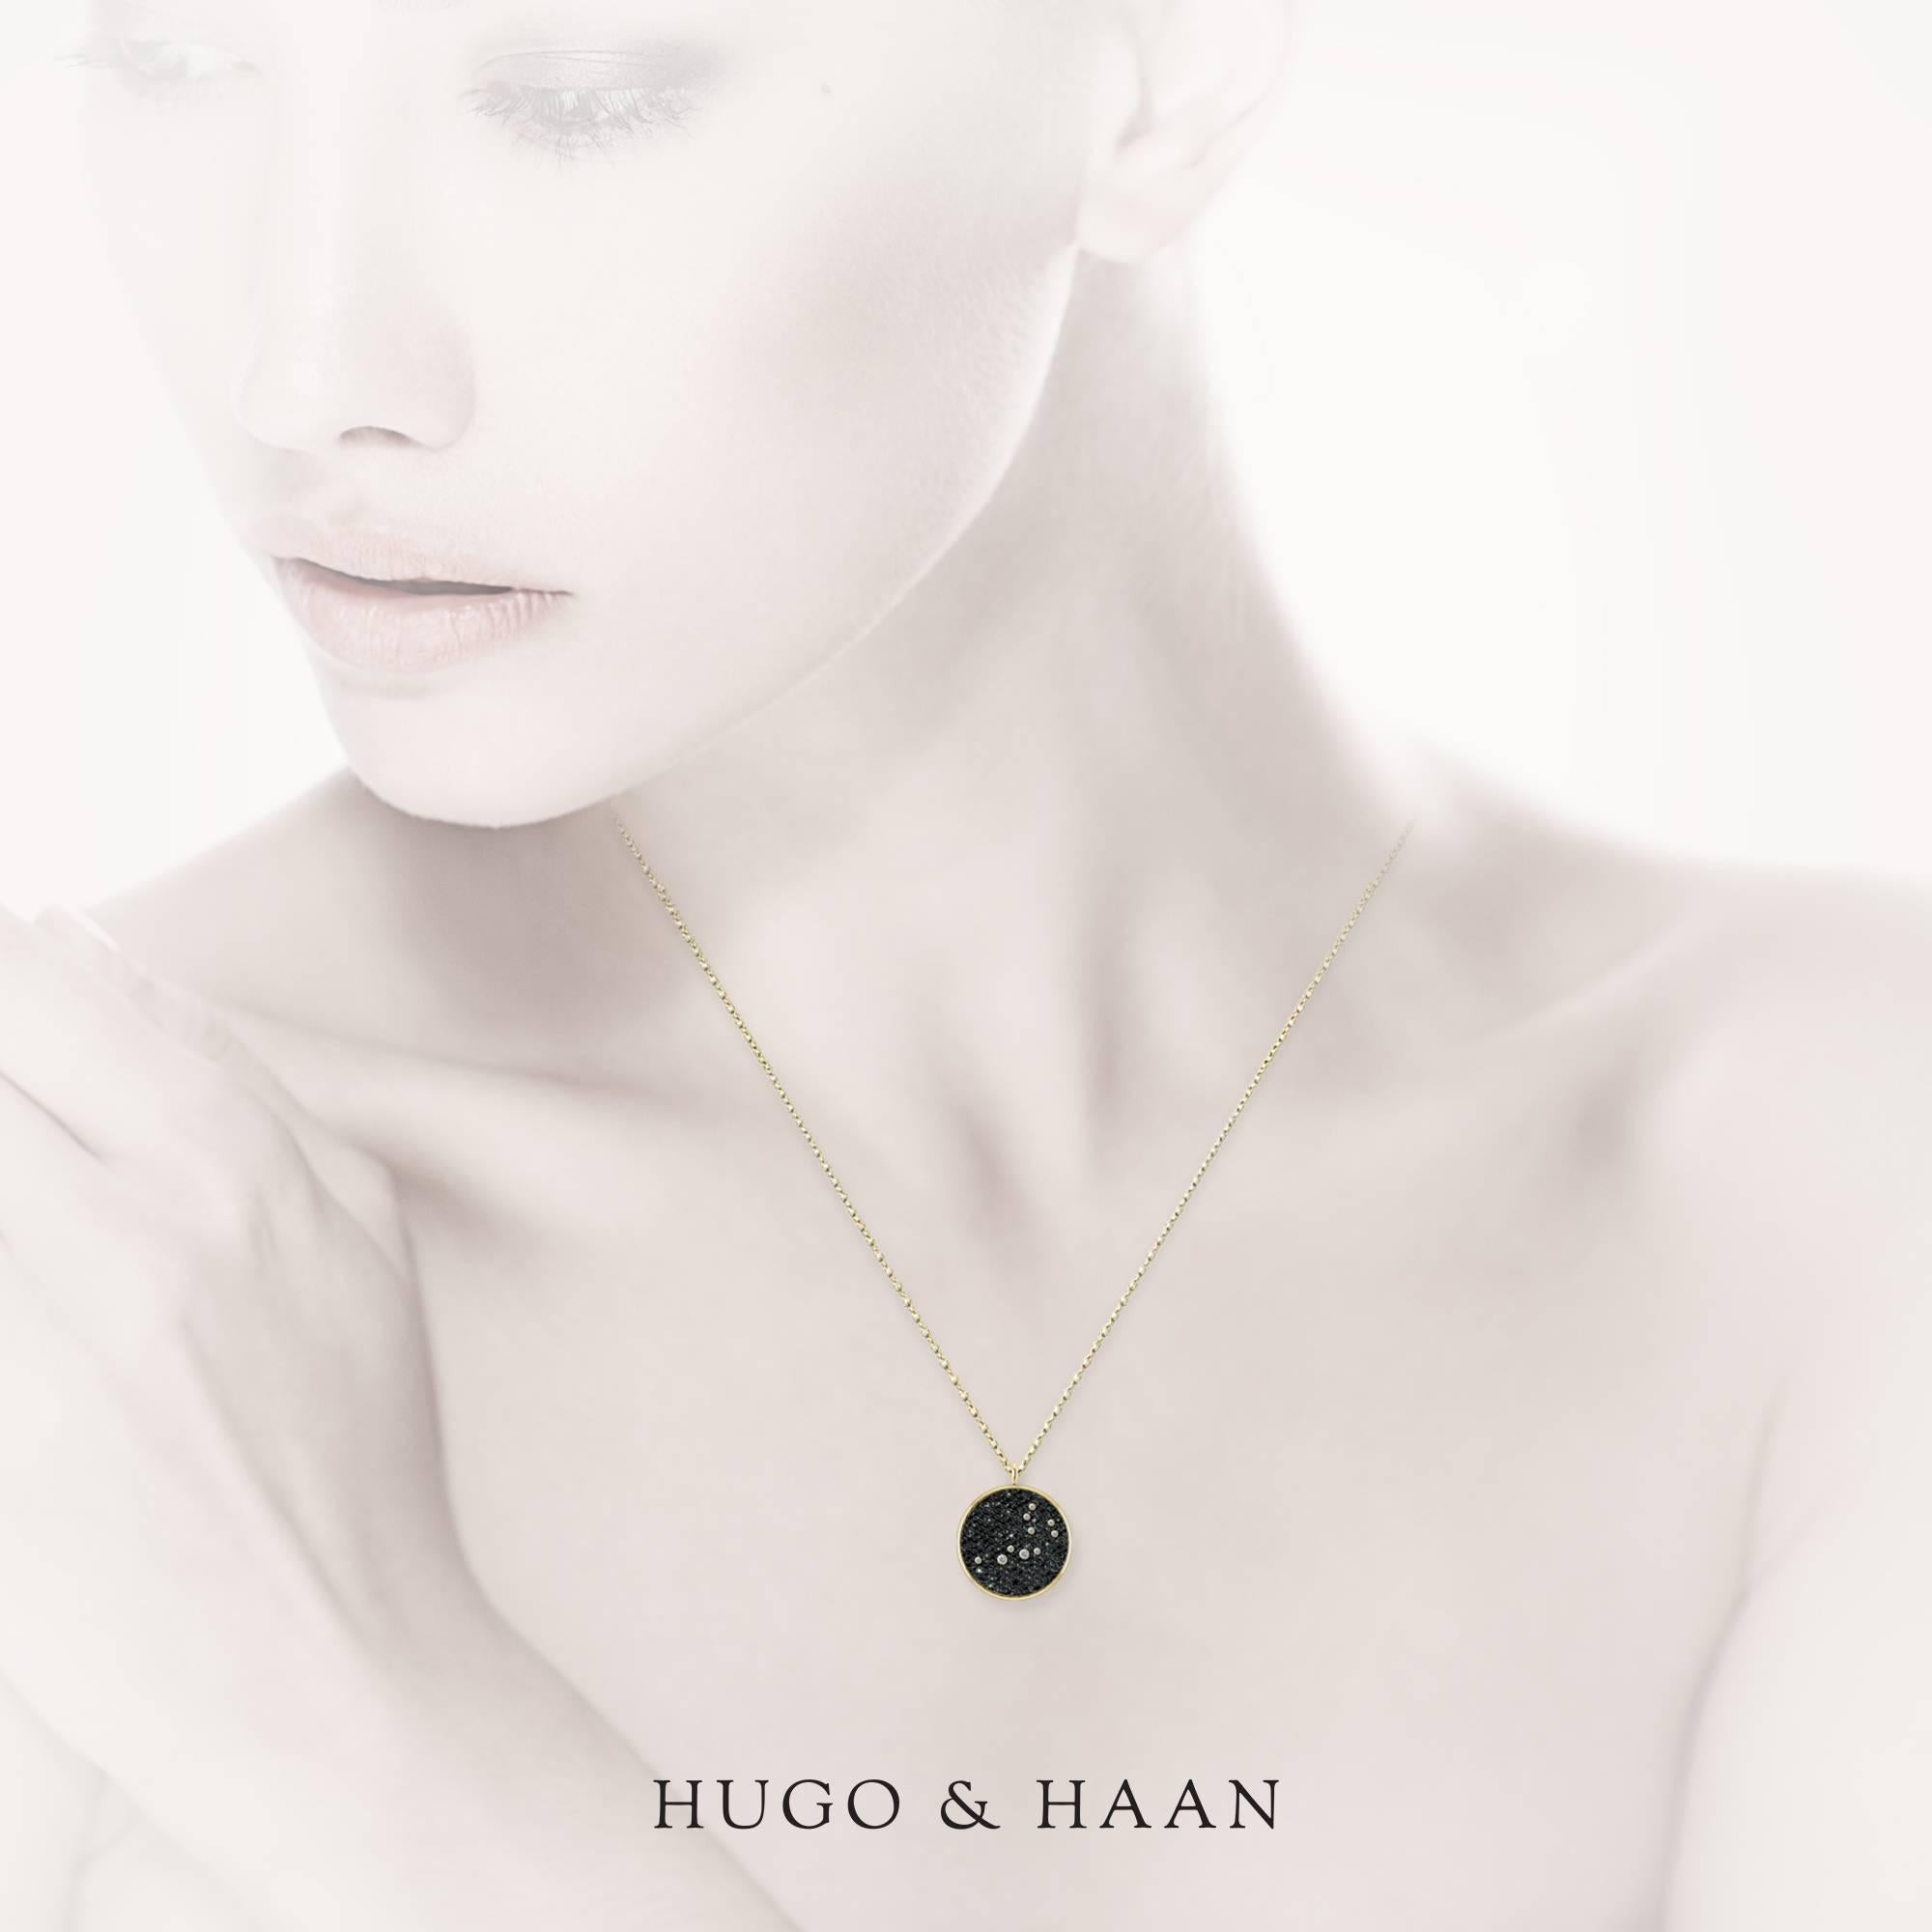 Hugo & Haan Gold Diamond Sagittarius Zodiac Constellation Star Pendant Necklace In New Condition For Sale In London, GB